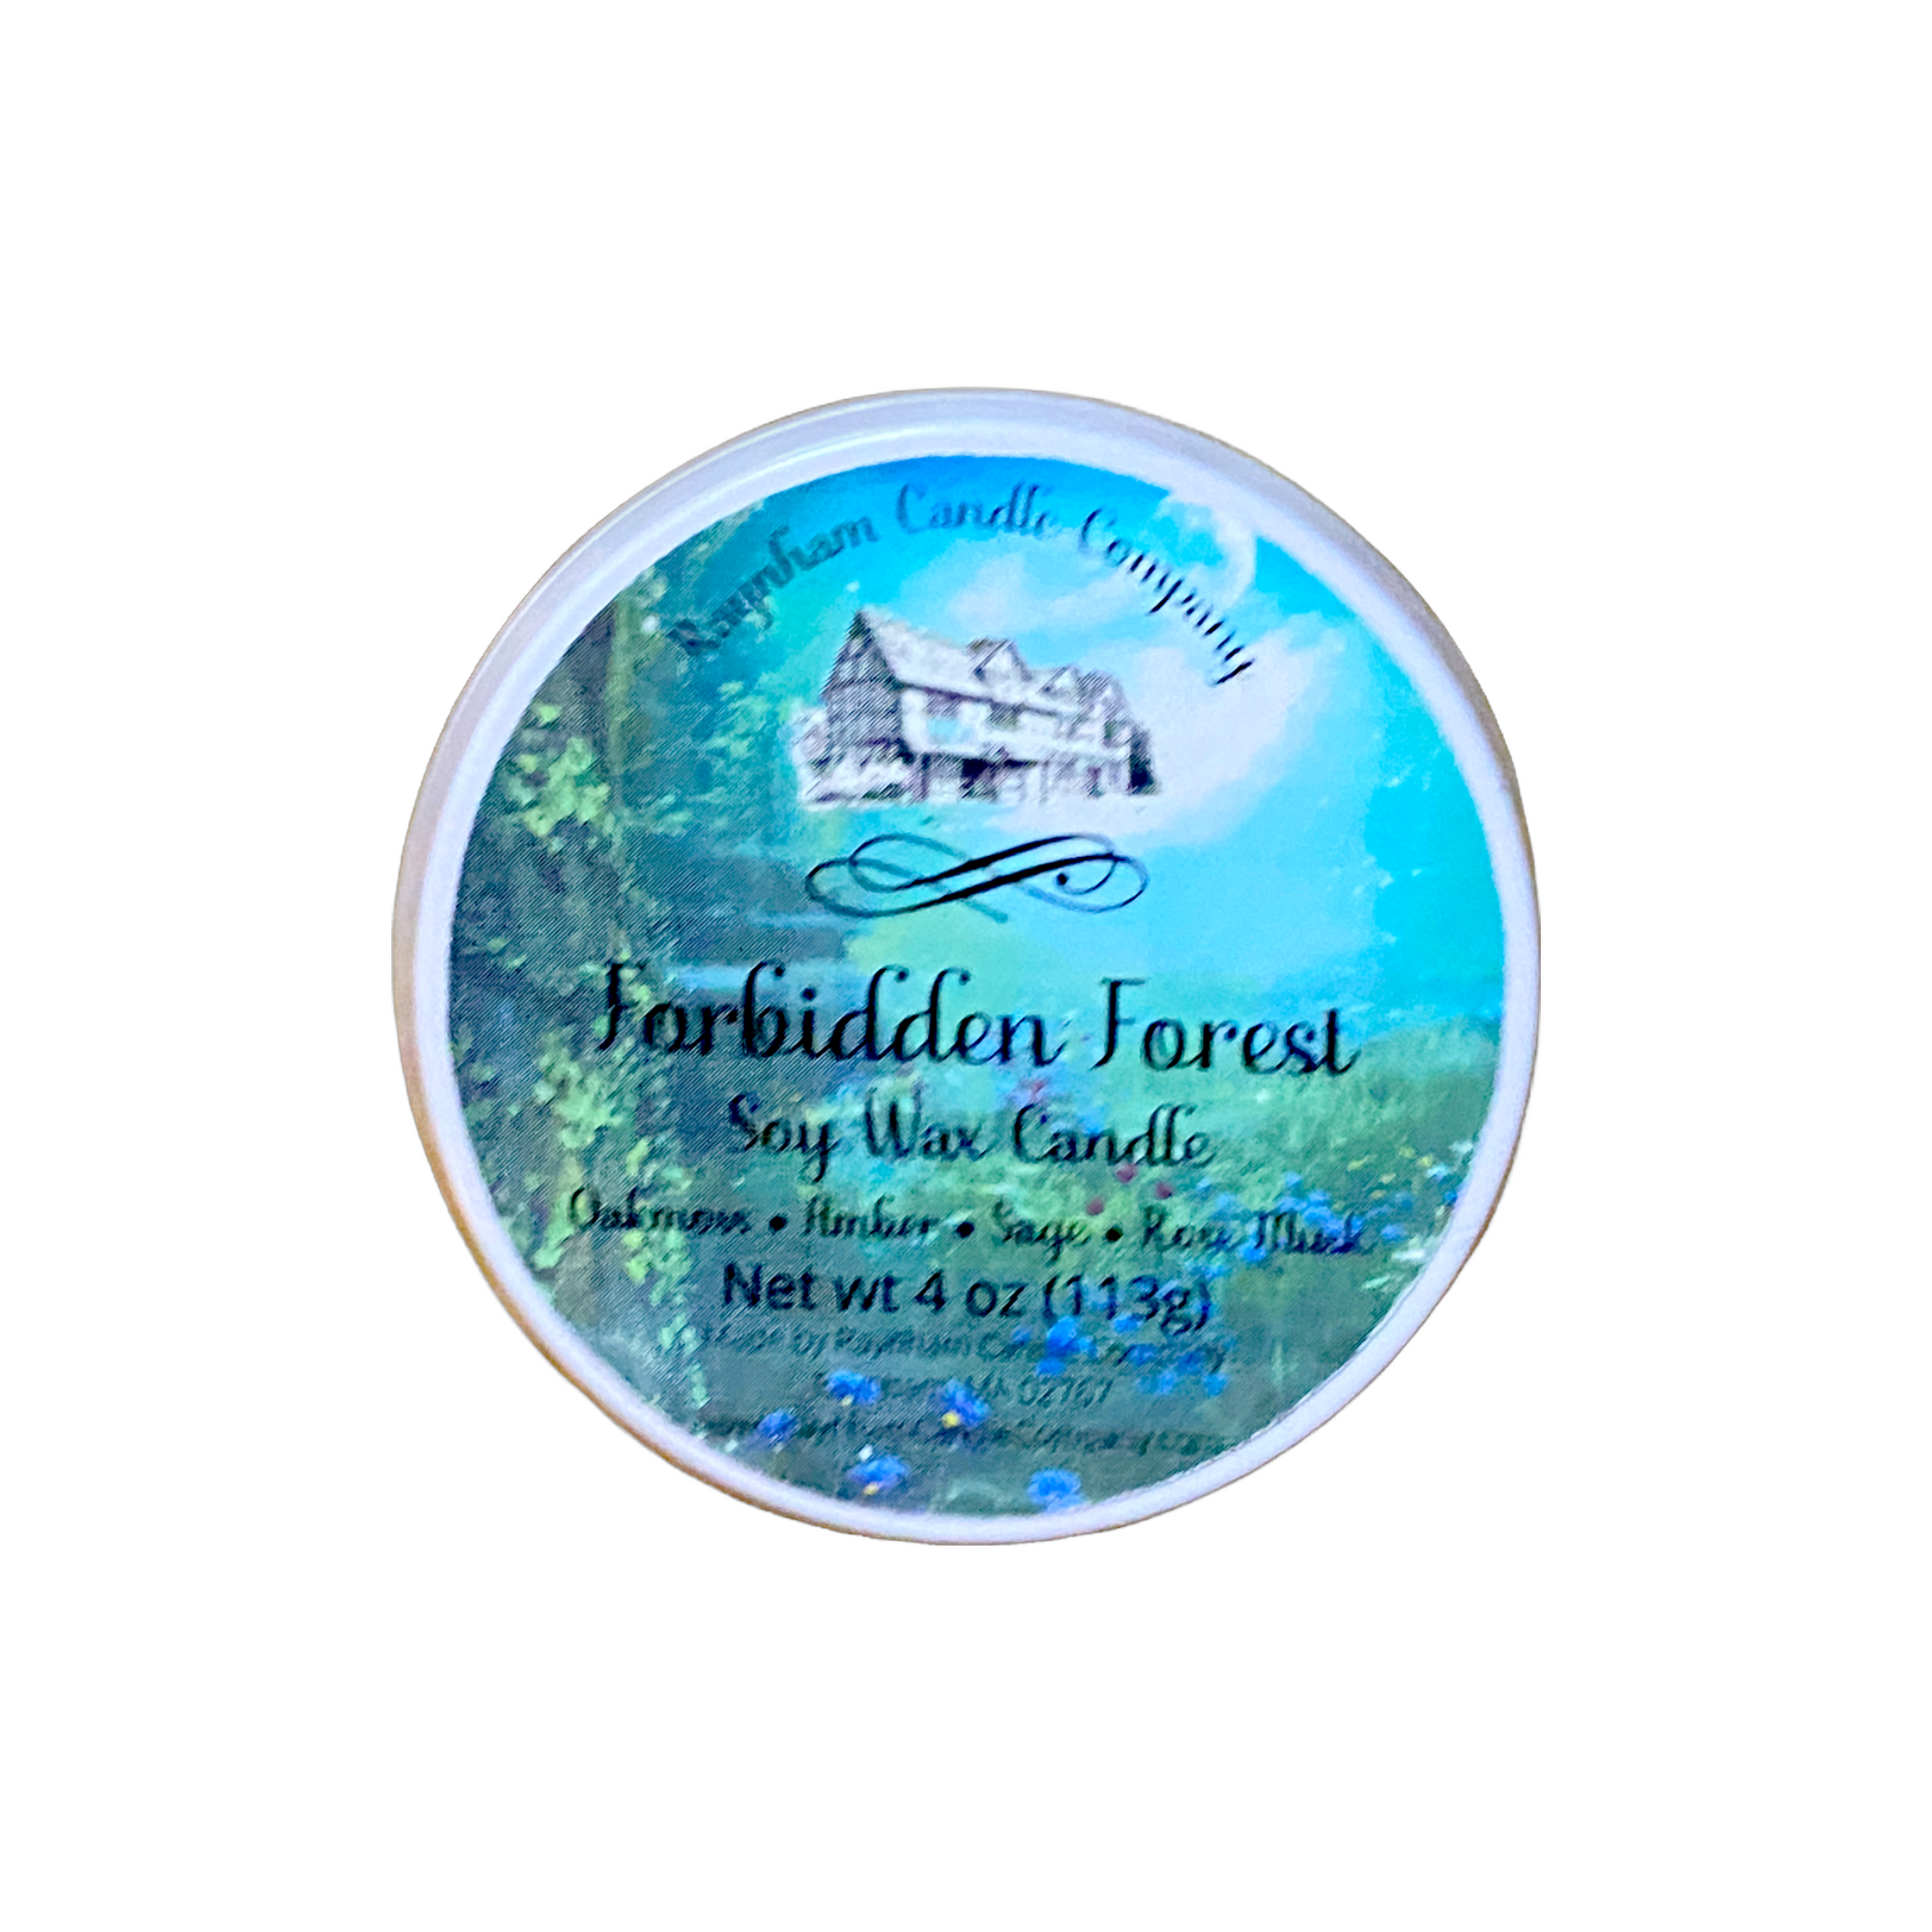 Forbidden Forest - Premium  from Raynham Candle Company  - Just $5.00! Shop now at Raynham Candle Company 